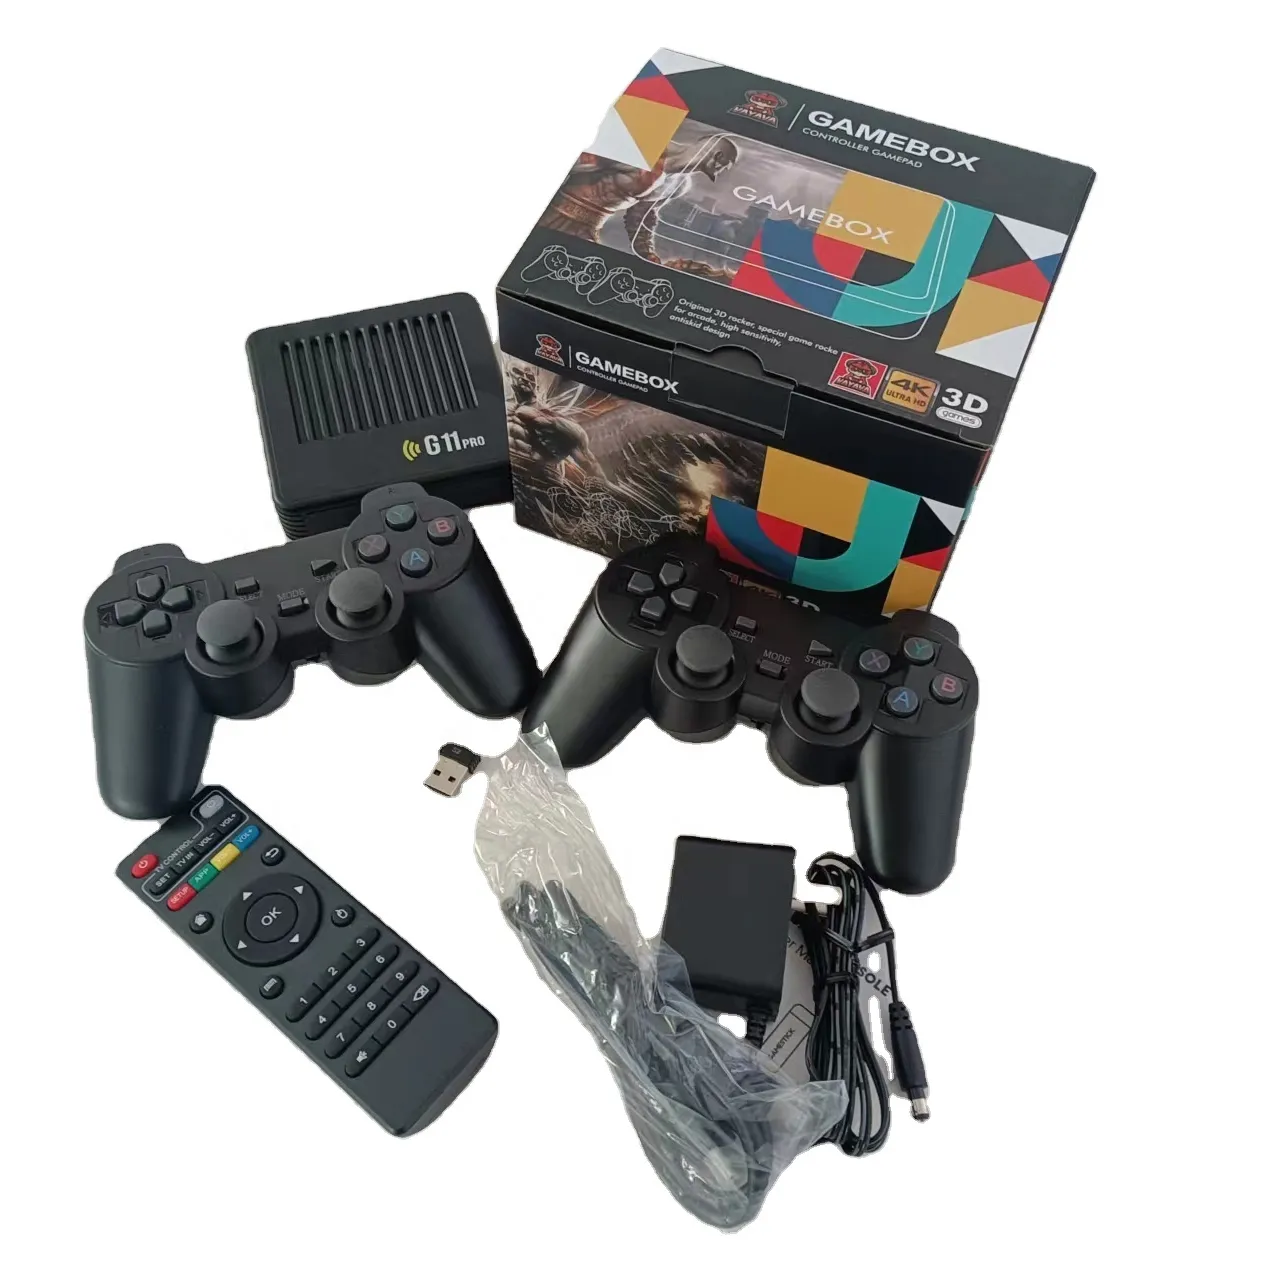 G11Pro 64G 30000+ Games Dual System 4k Hd Wireless Super Game Box Retro Arcade Video Game Consoles